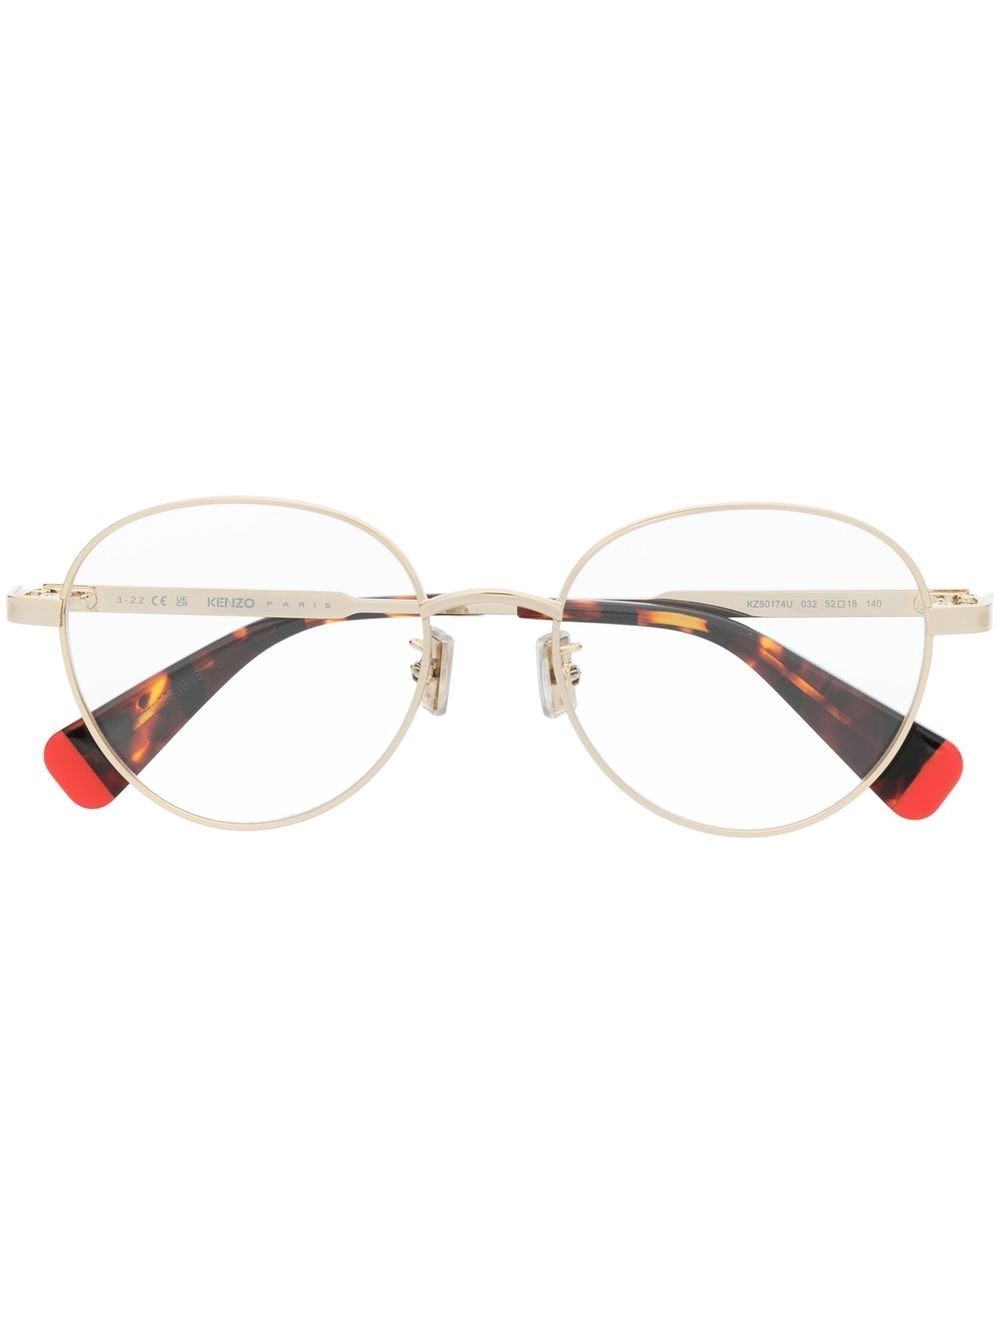 Kenzo polished round-frame glasses - Gold von Kenzo